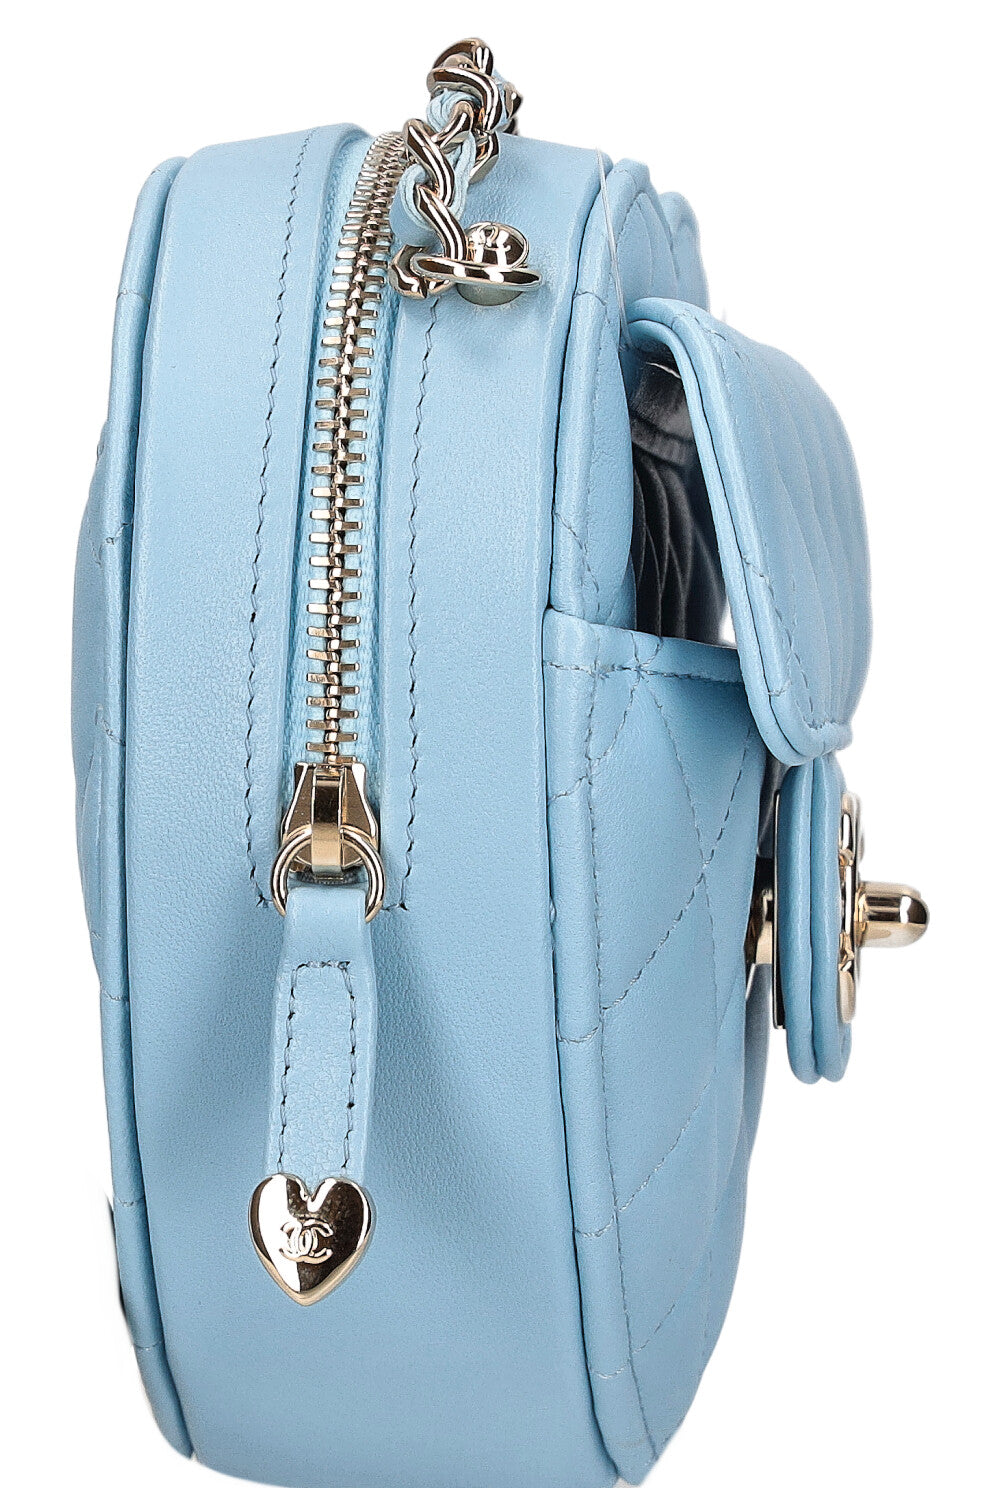 Chanel Spring-Summer 2022 Heart Bag in blue